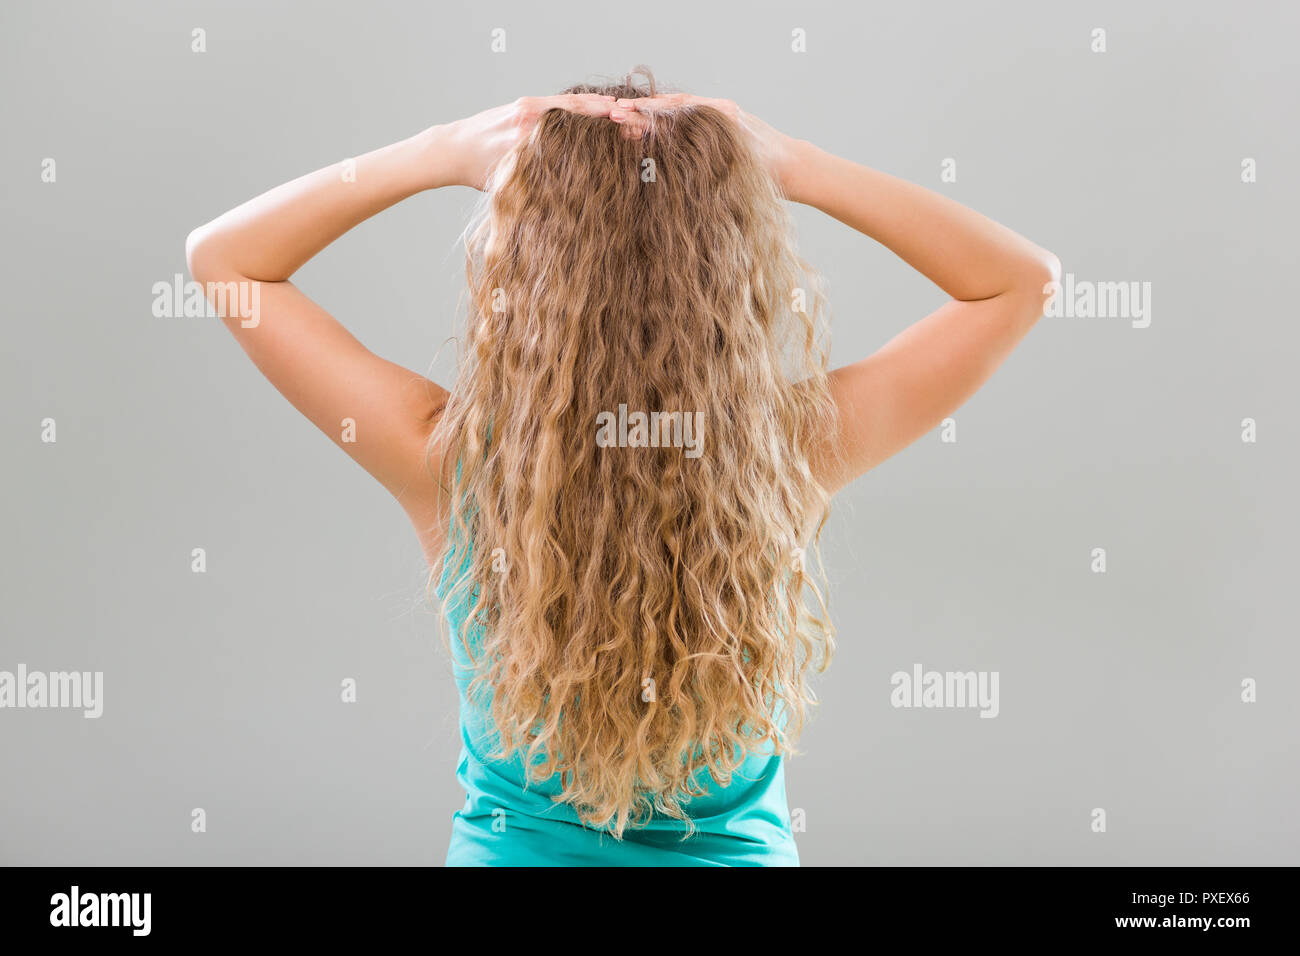 Long Curly Blonde Hair Stock Photos Long Curly Blonde Hair Stock